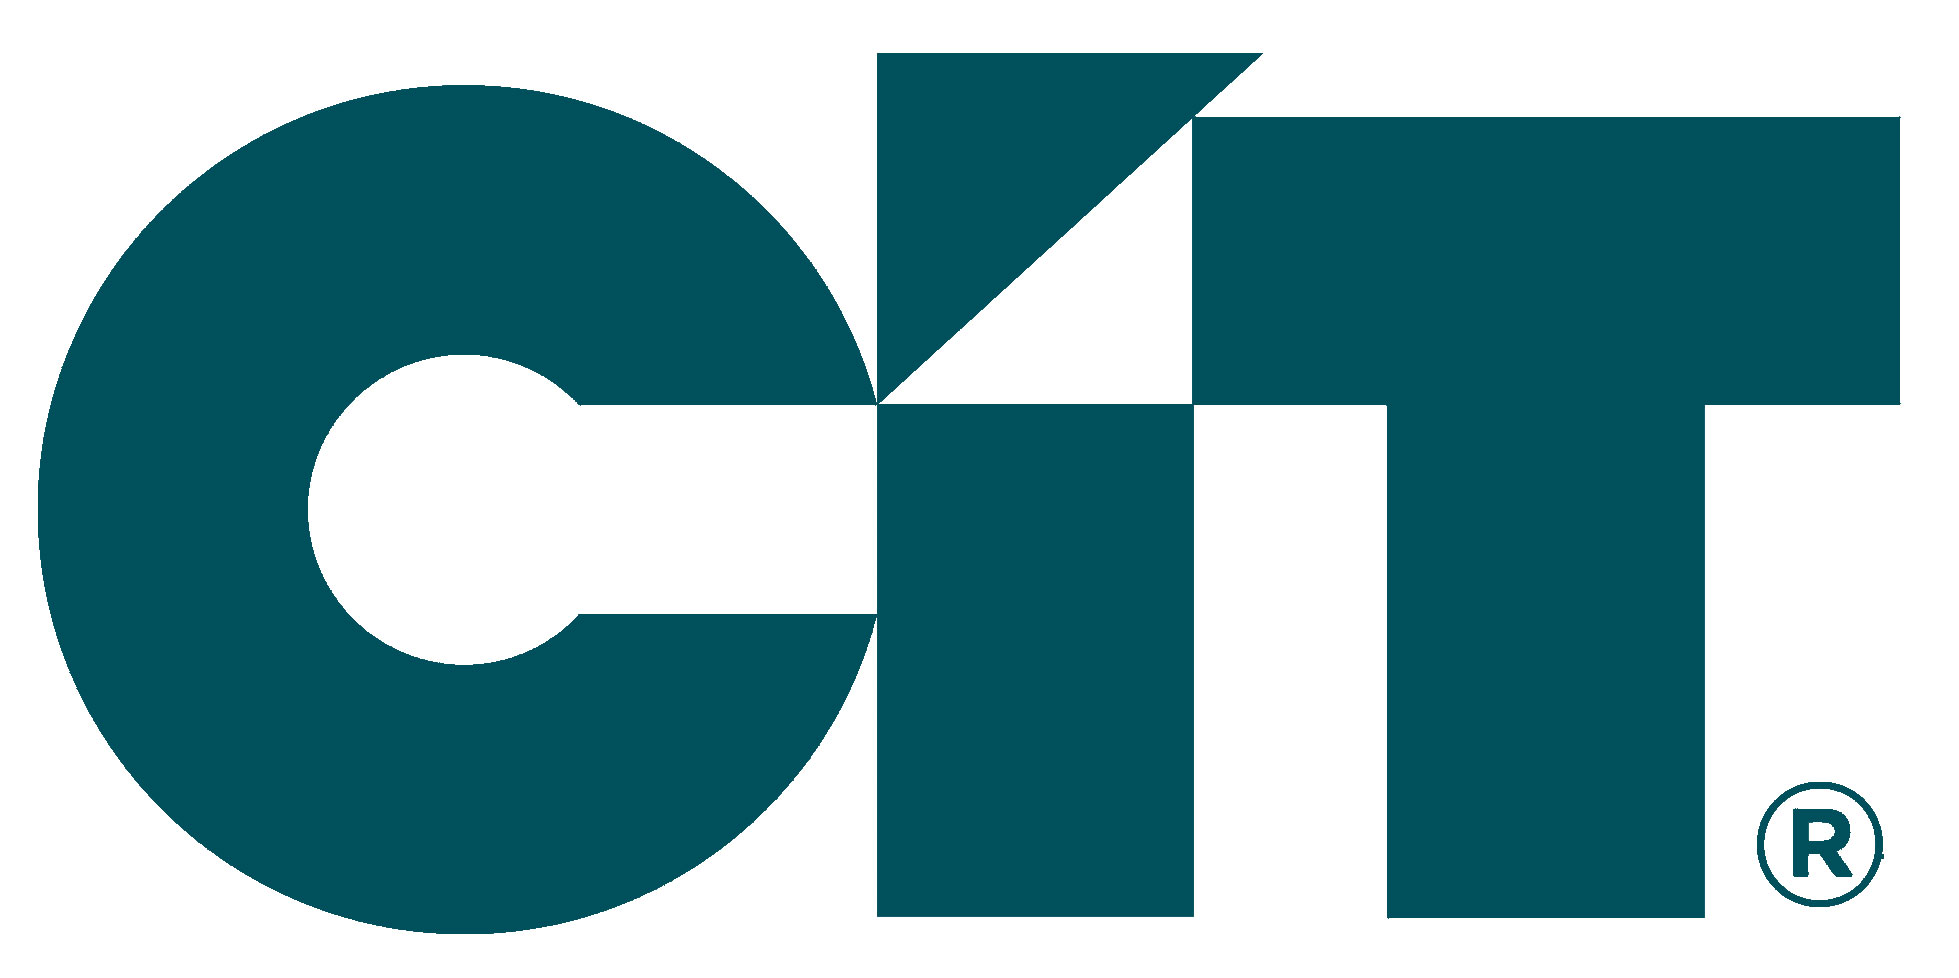 CIT Brand Logo